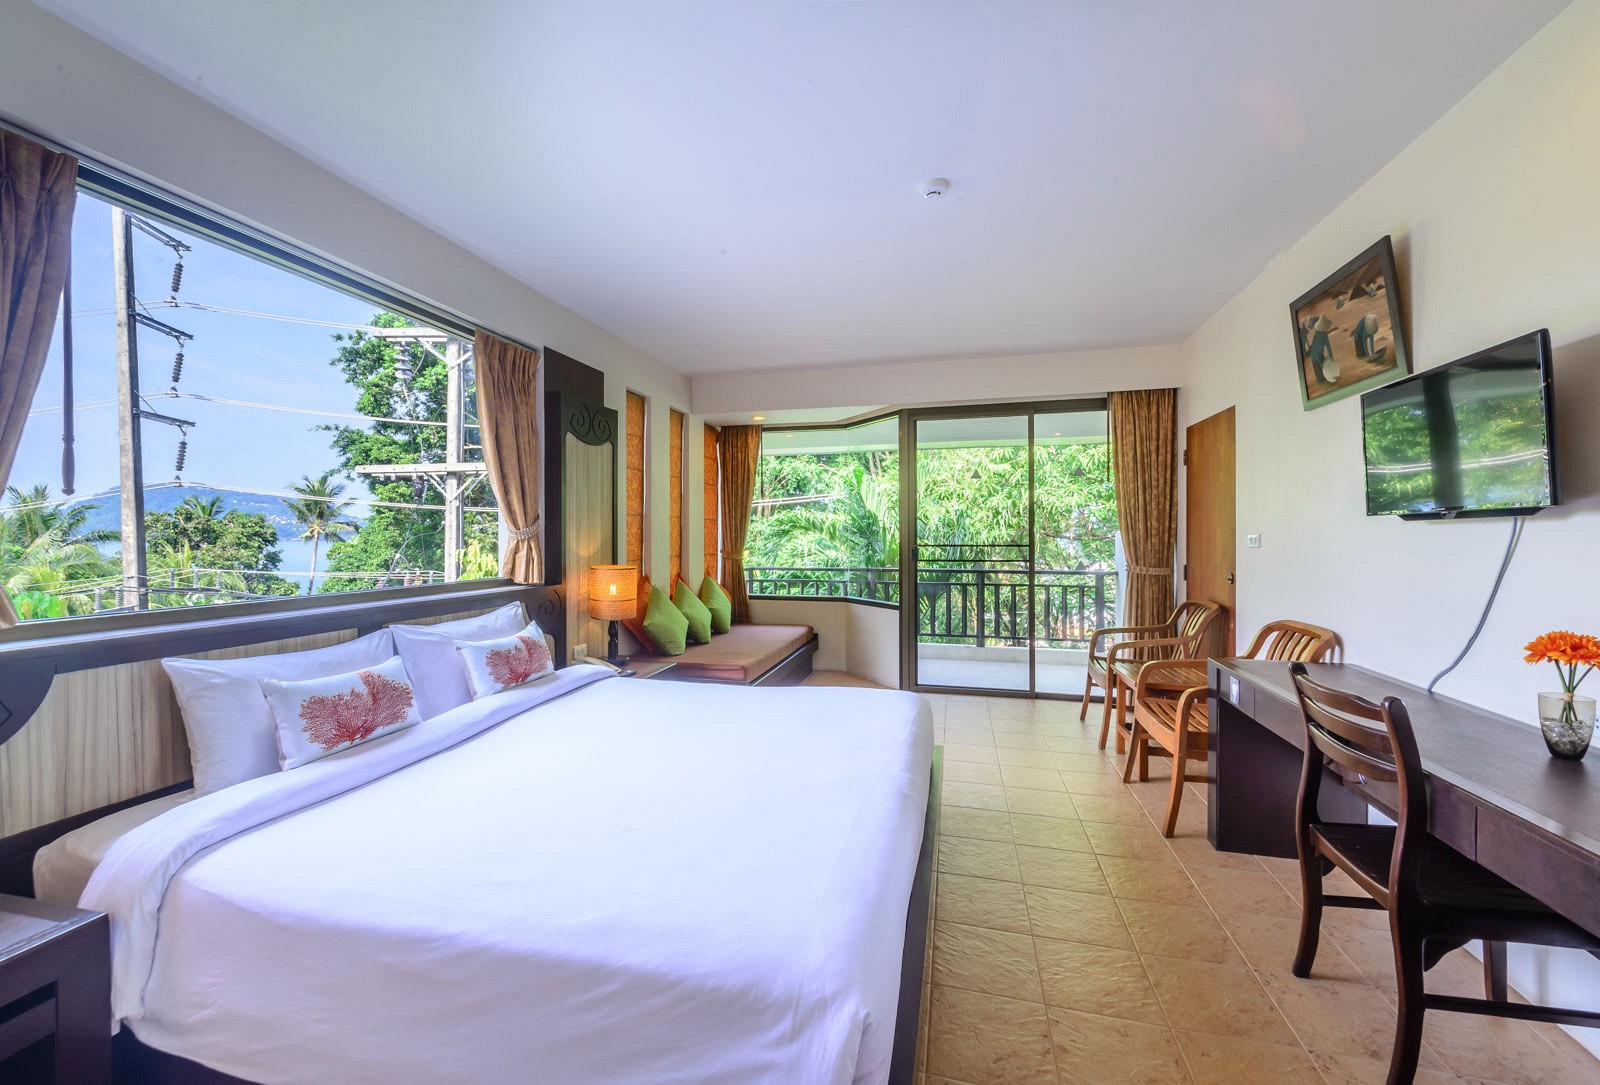 Patong Lodge Hotel Phuket